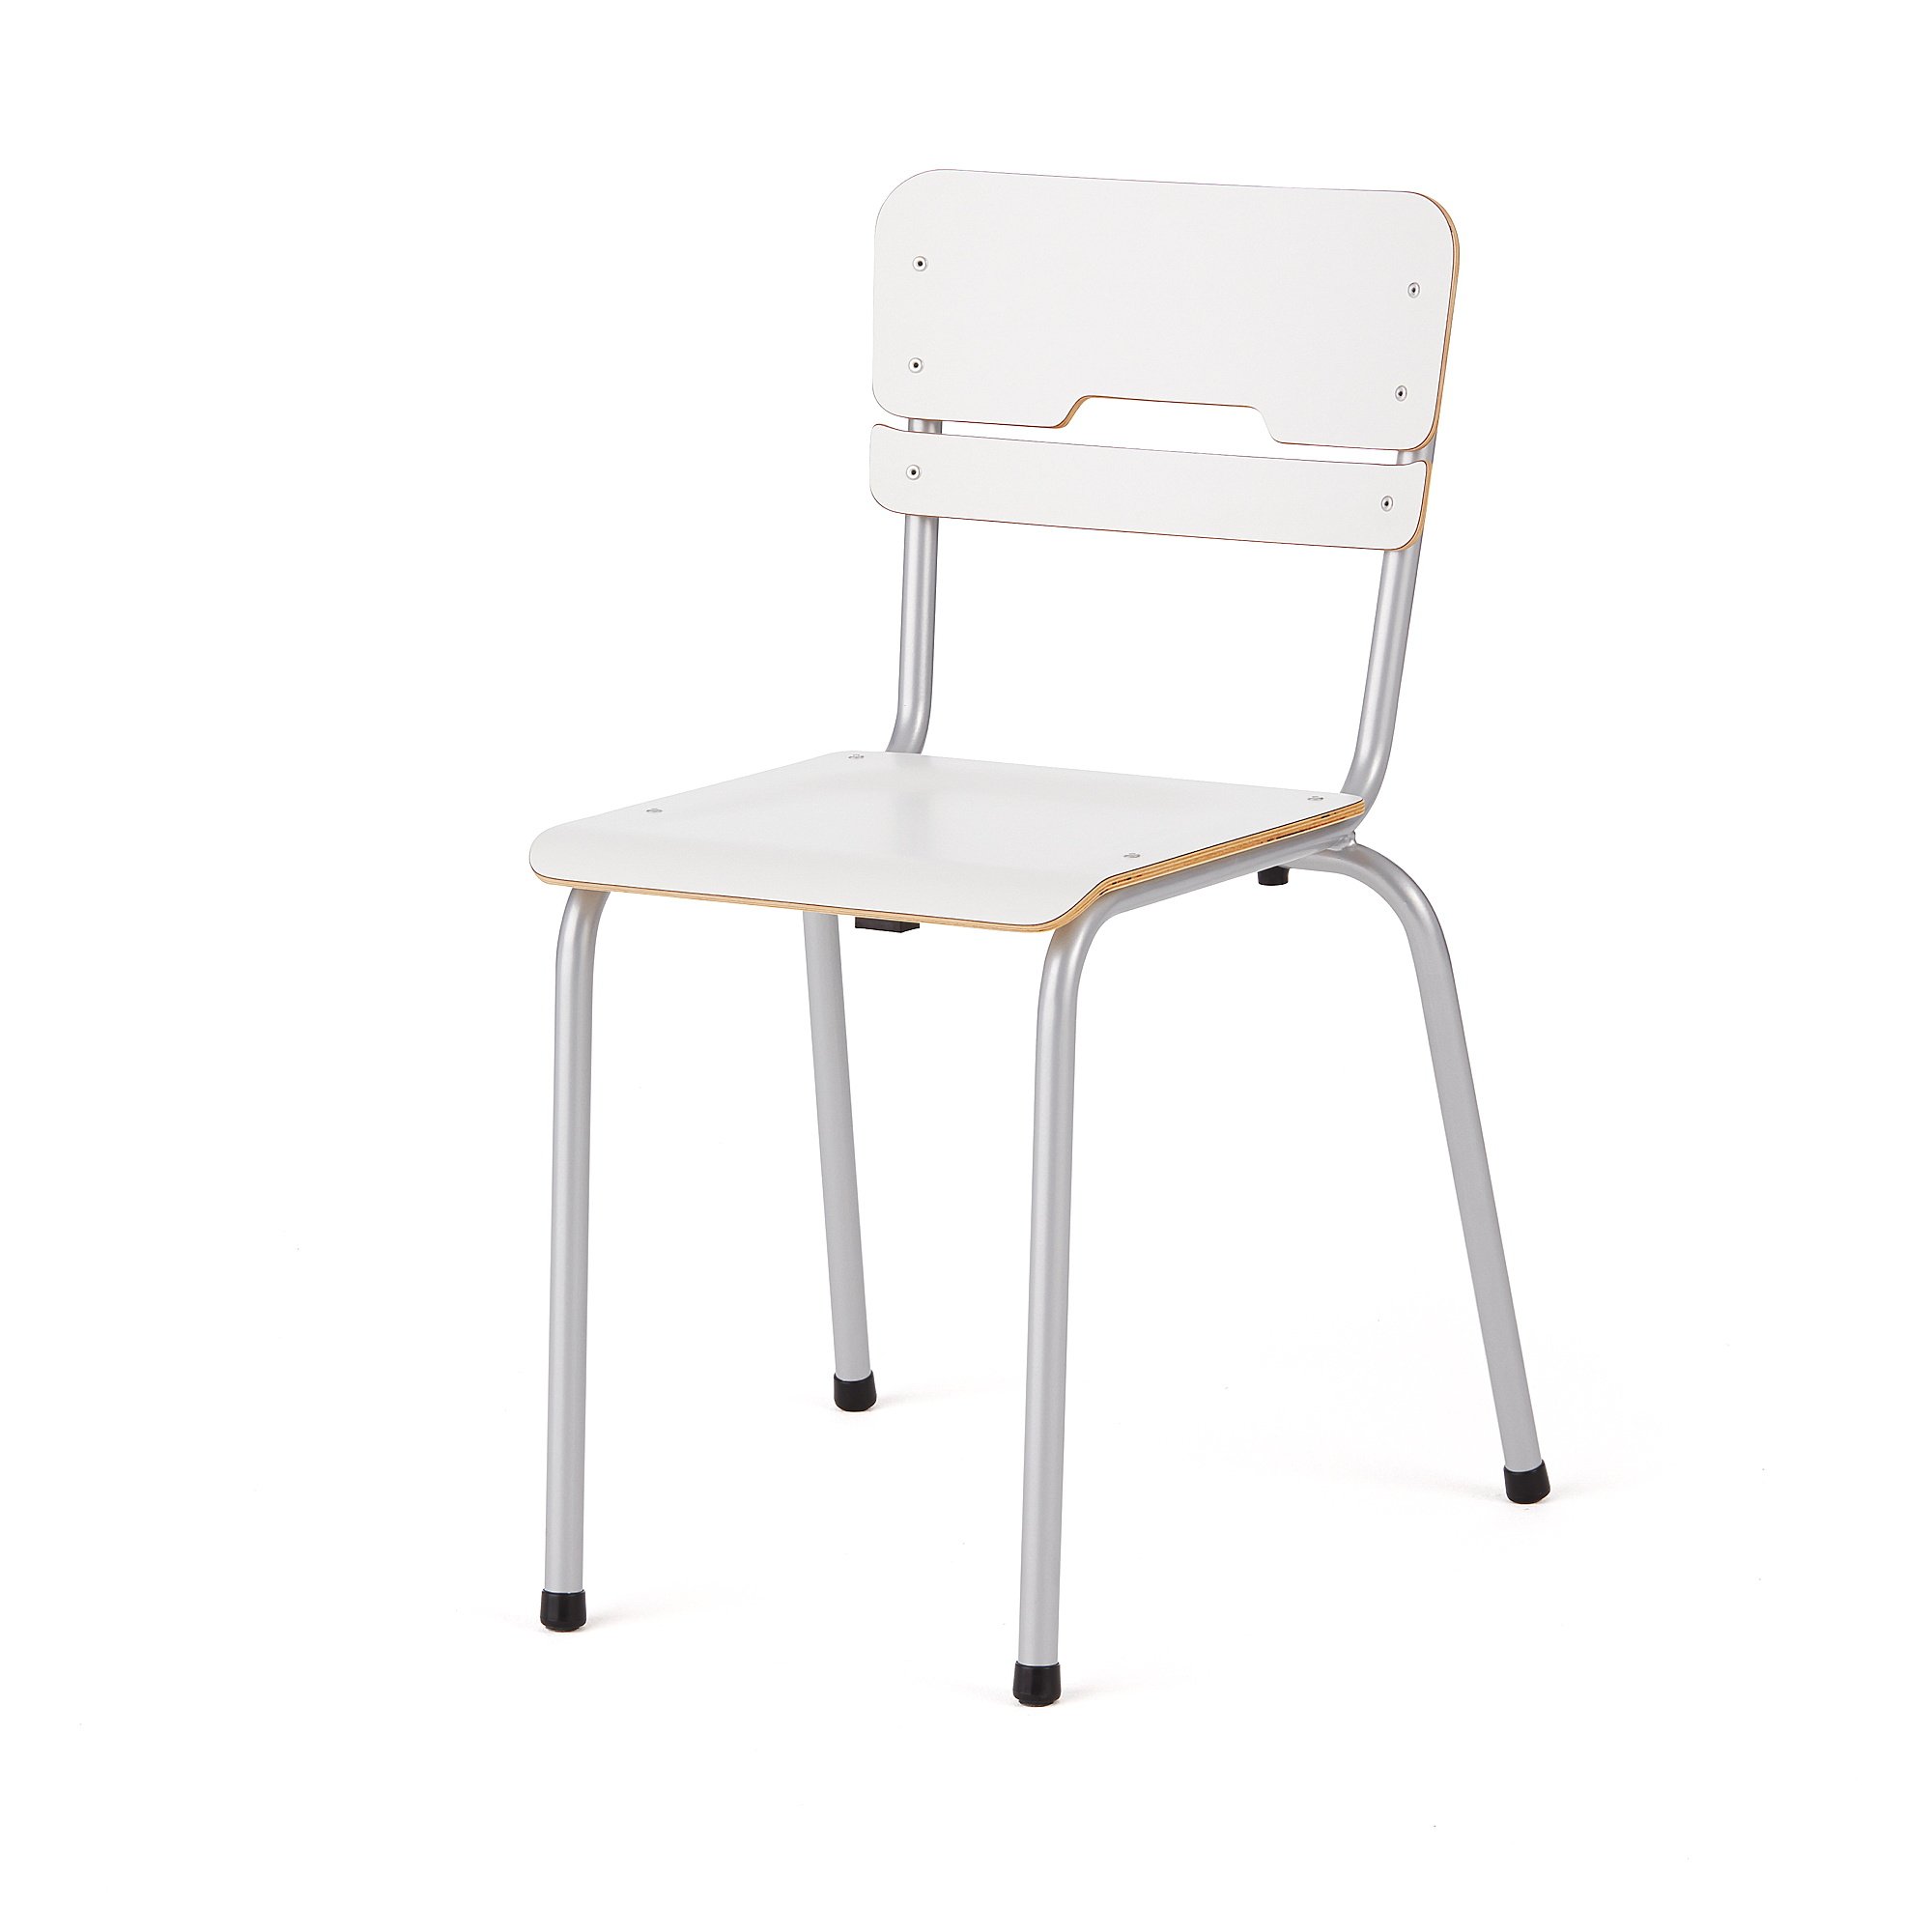 Školní židle SCIENTIA, sedák 360x360 mm, výška 460 mm, stříbrná/bílá